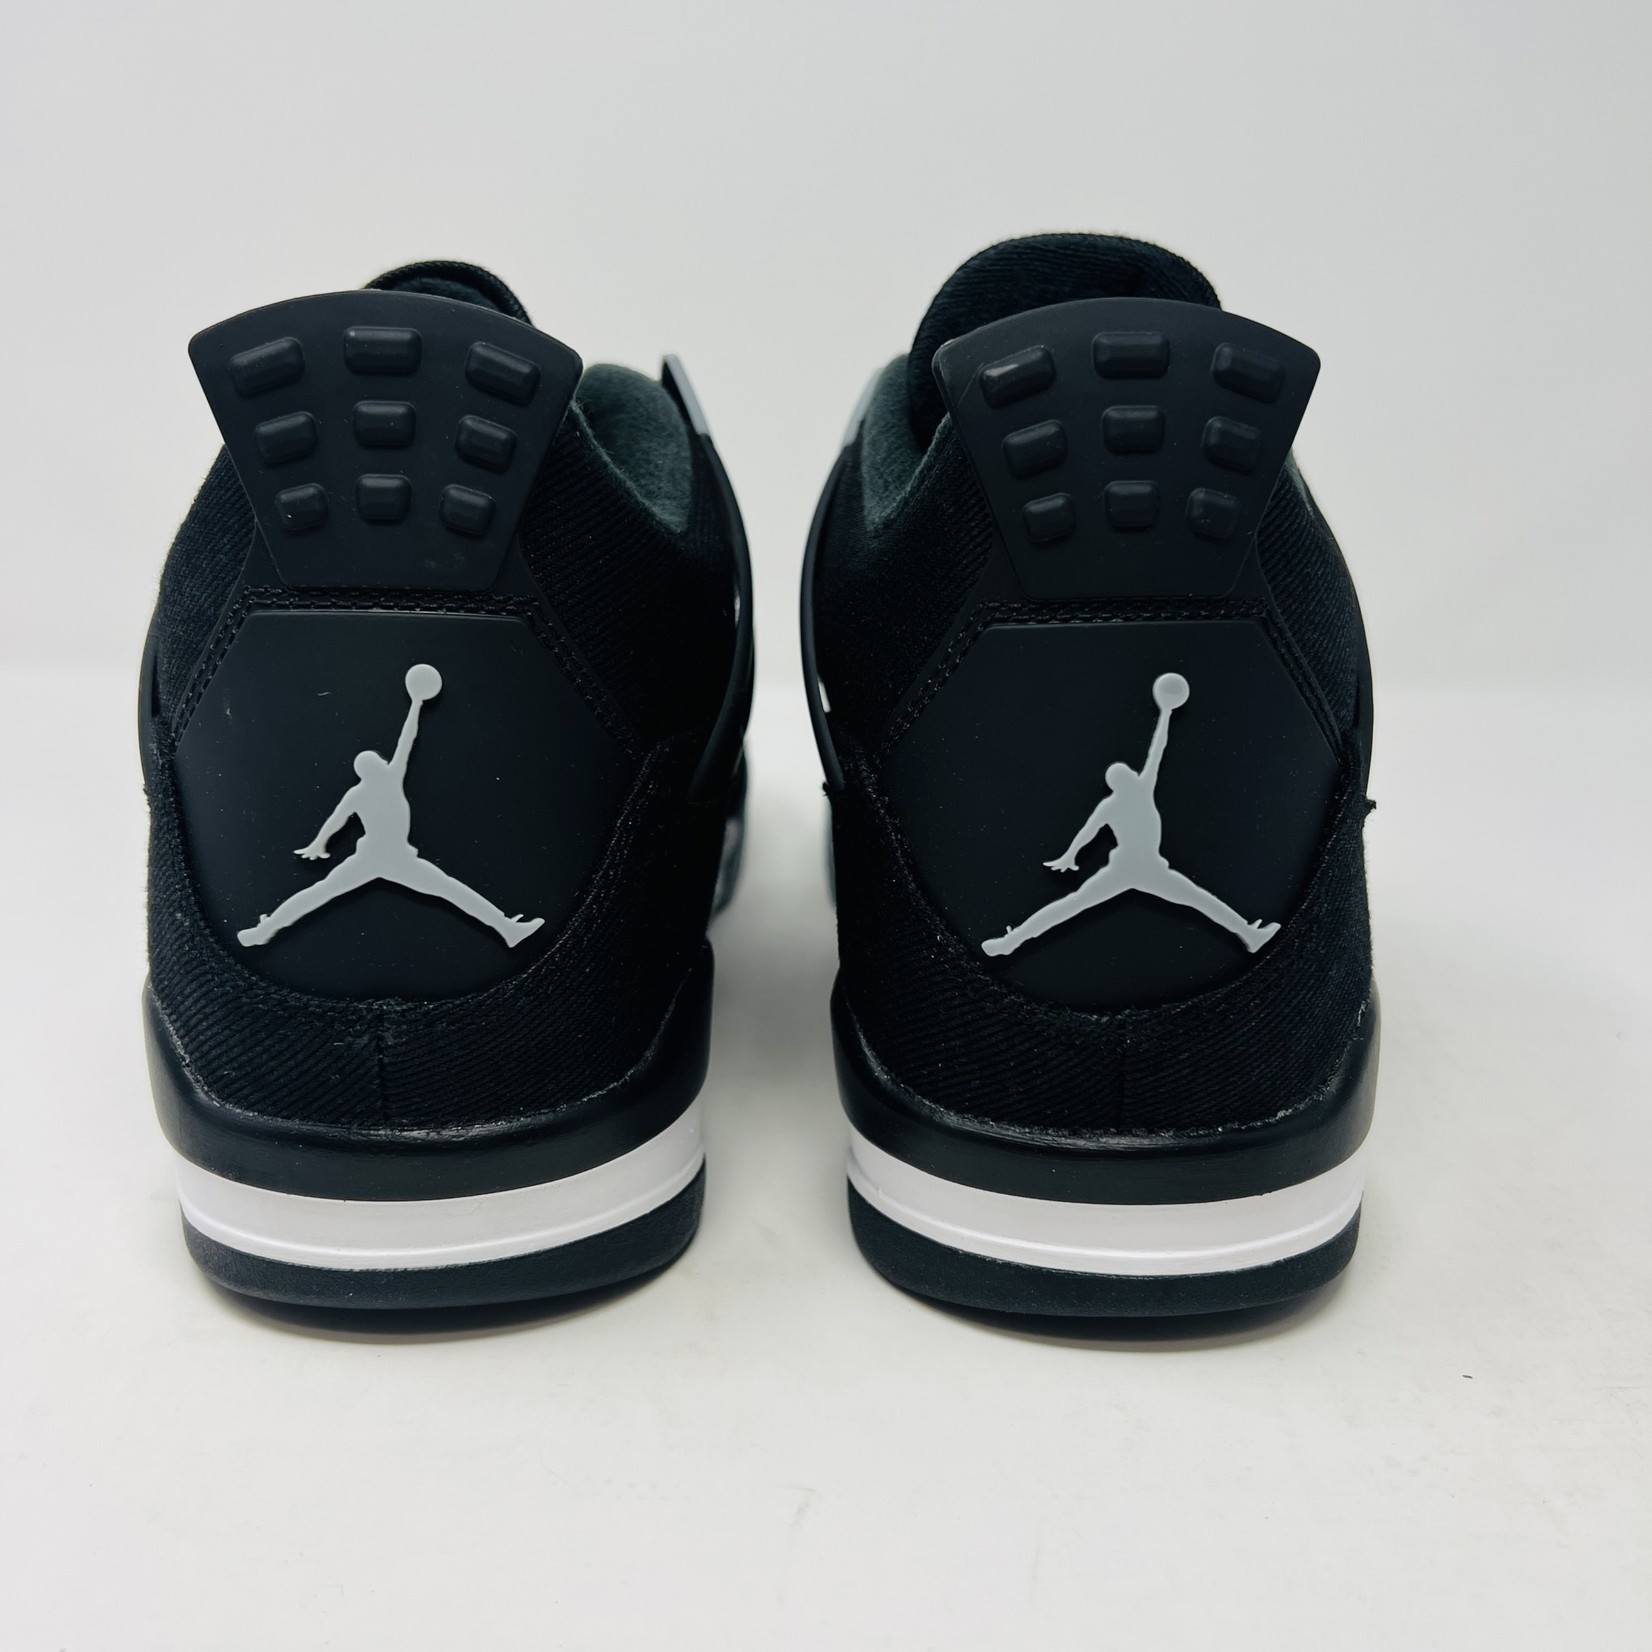 Jordan Jordan 4 Black Canvas